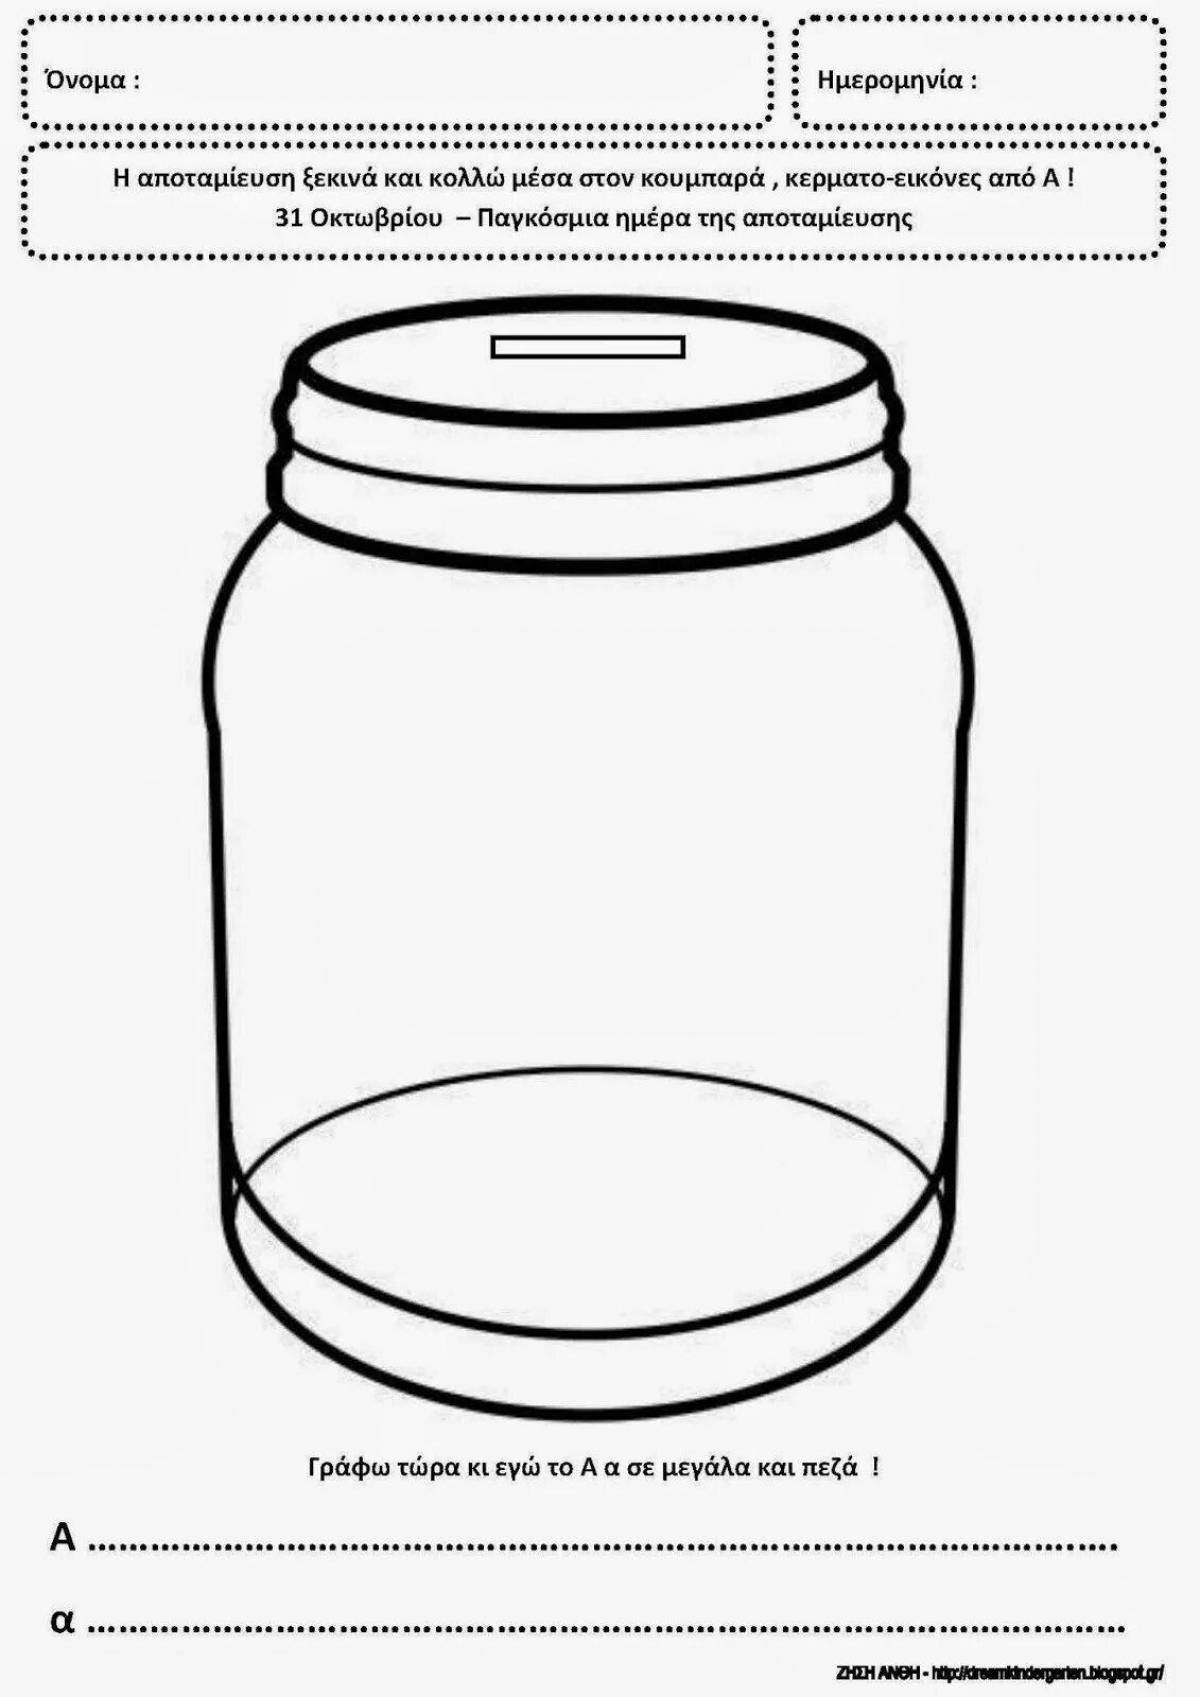 Children's vitamin jar #5